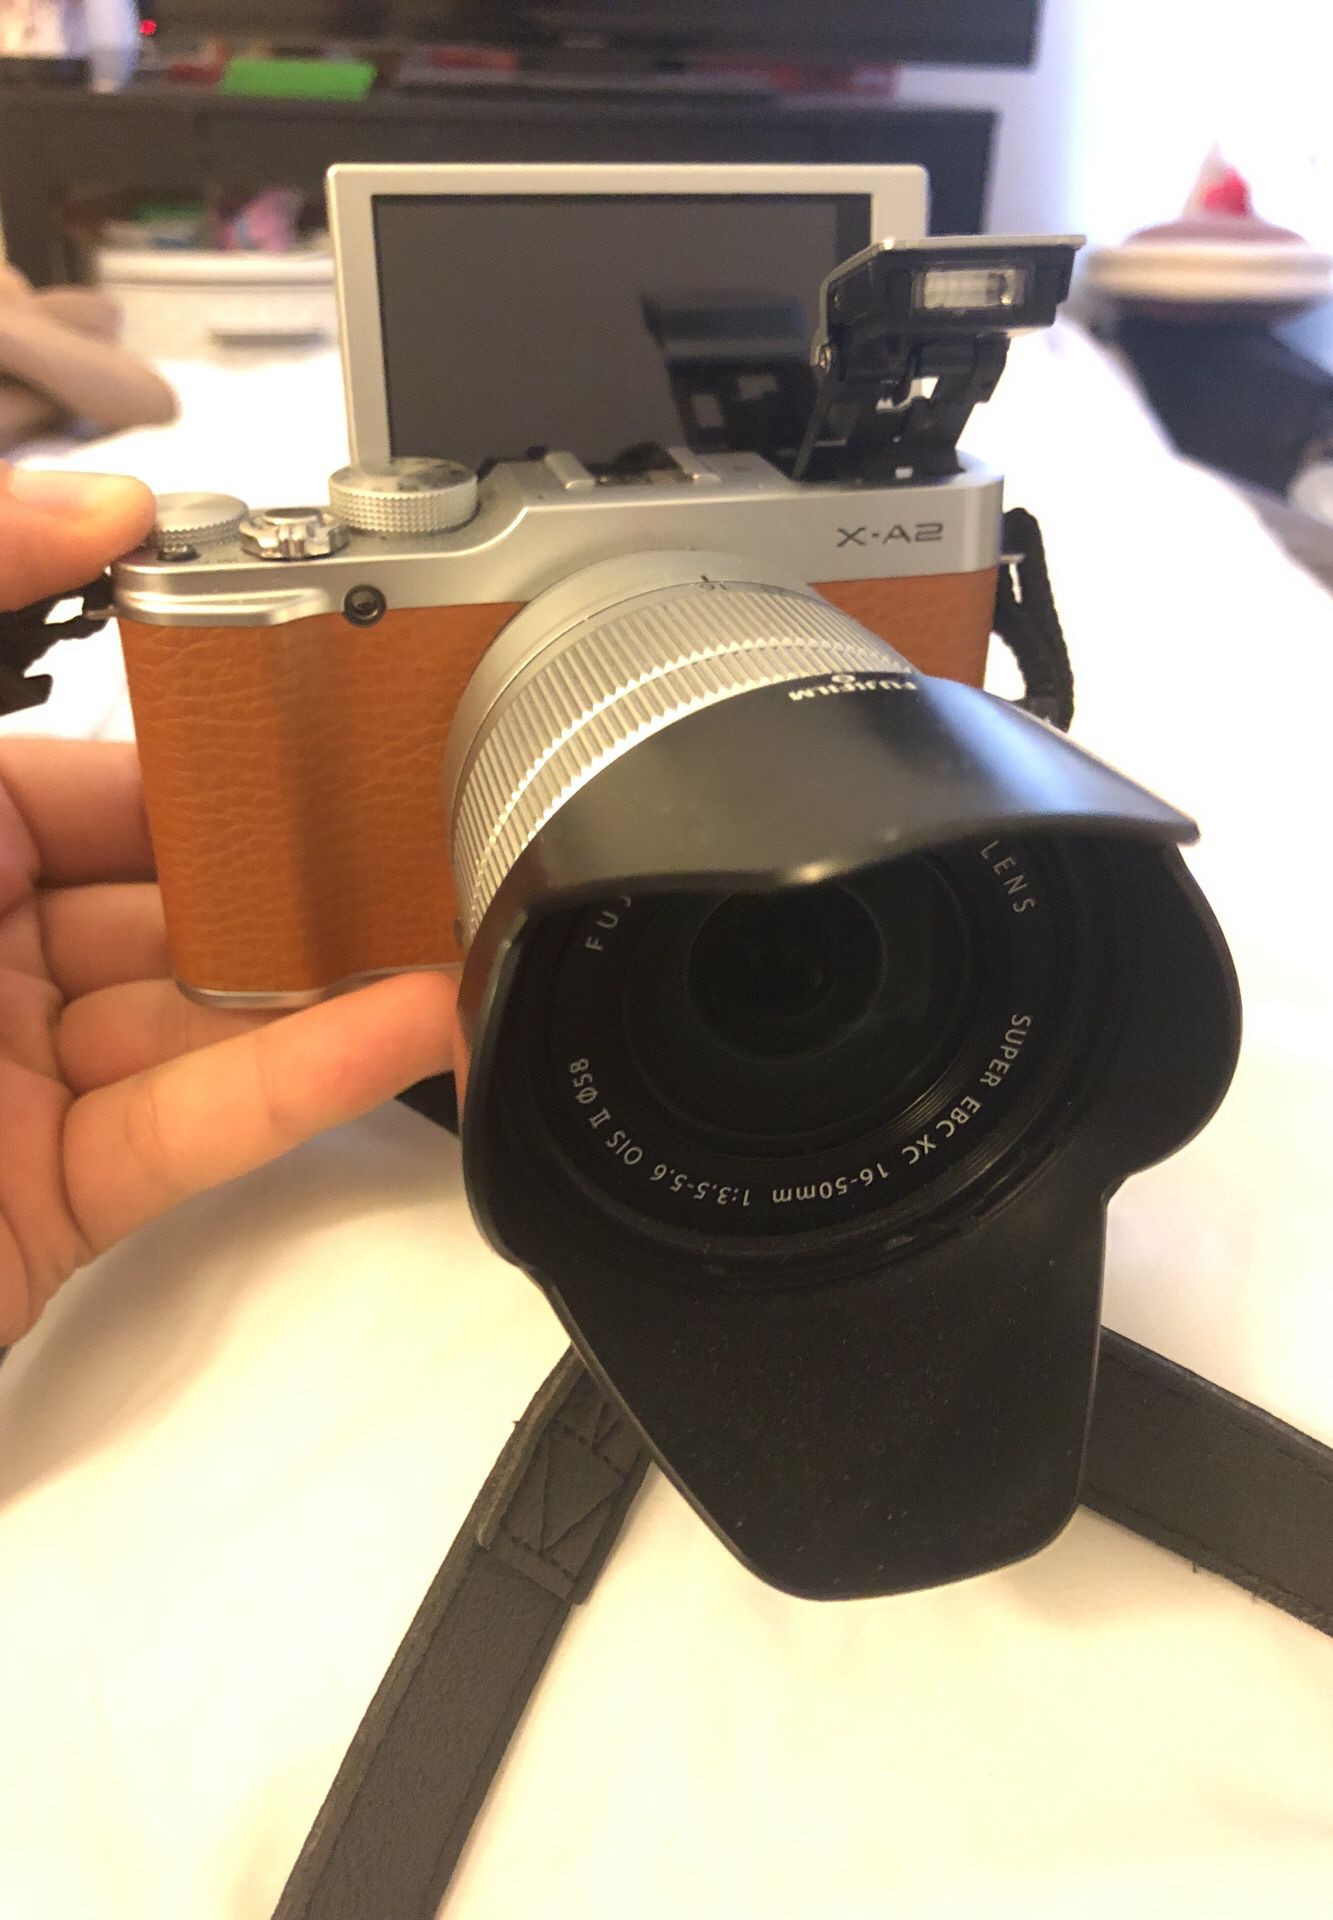 Fujifilm X-A2 Mirrorless Digital Camera with 16-50mm Lens (Brown)